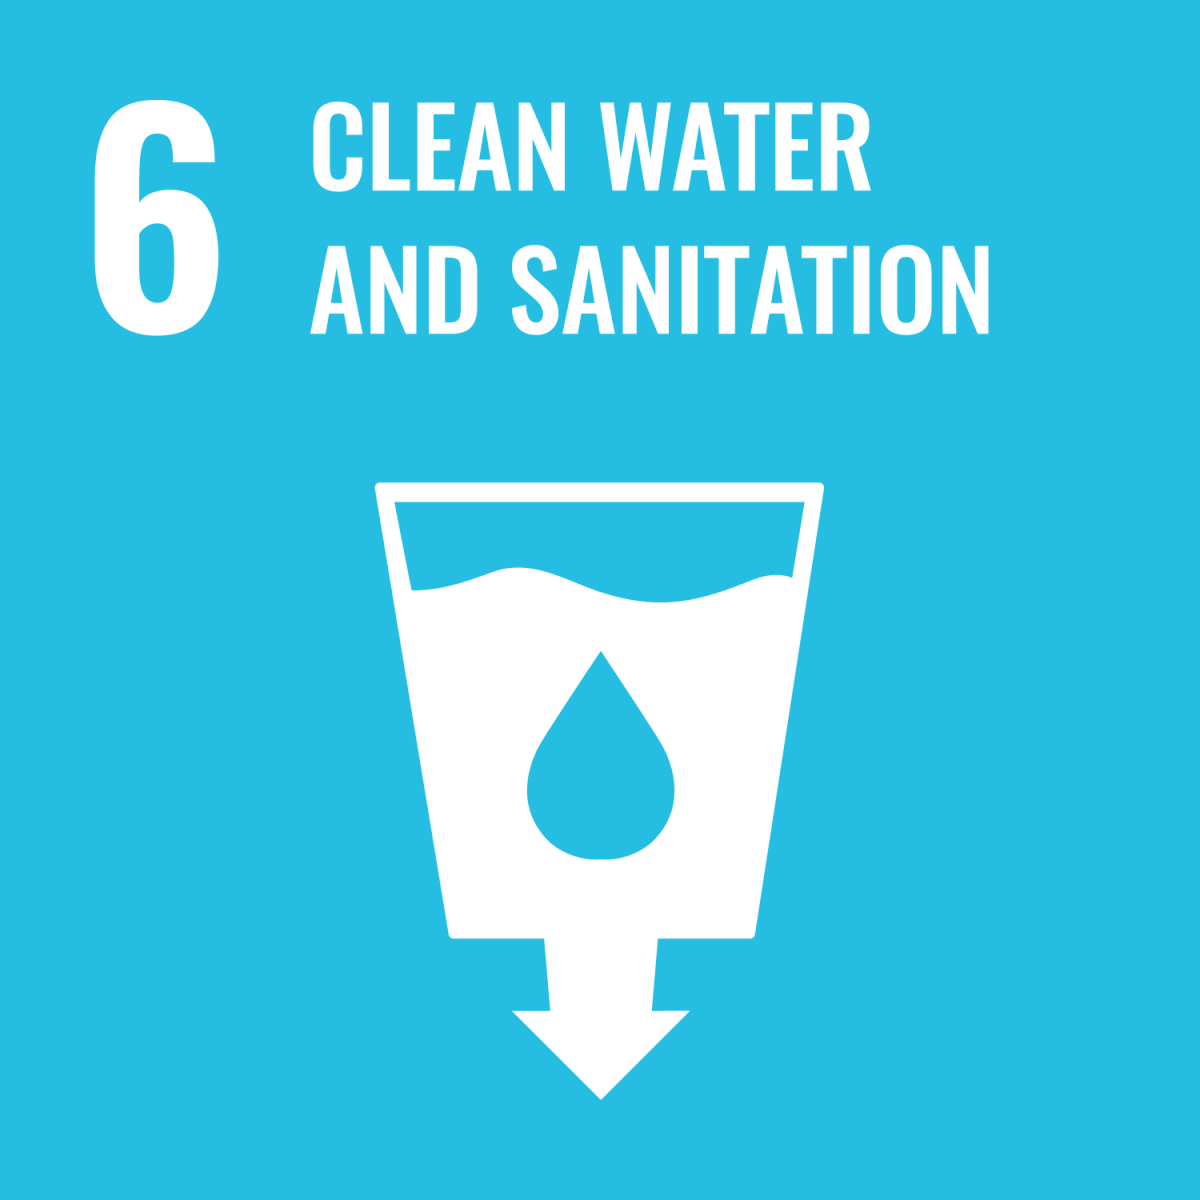 Shows UN SDG 6 - Clean Water and Sanitation